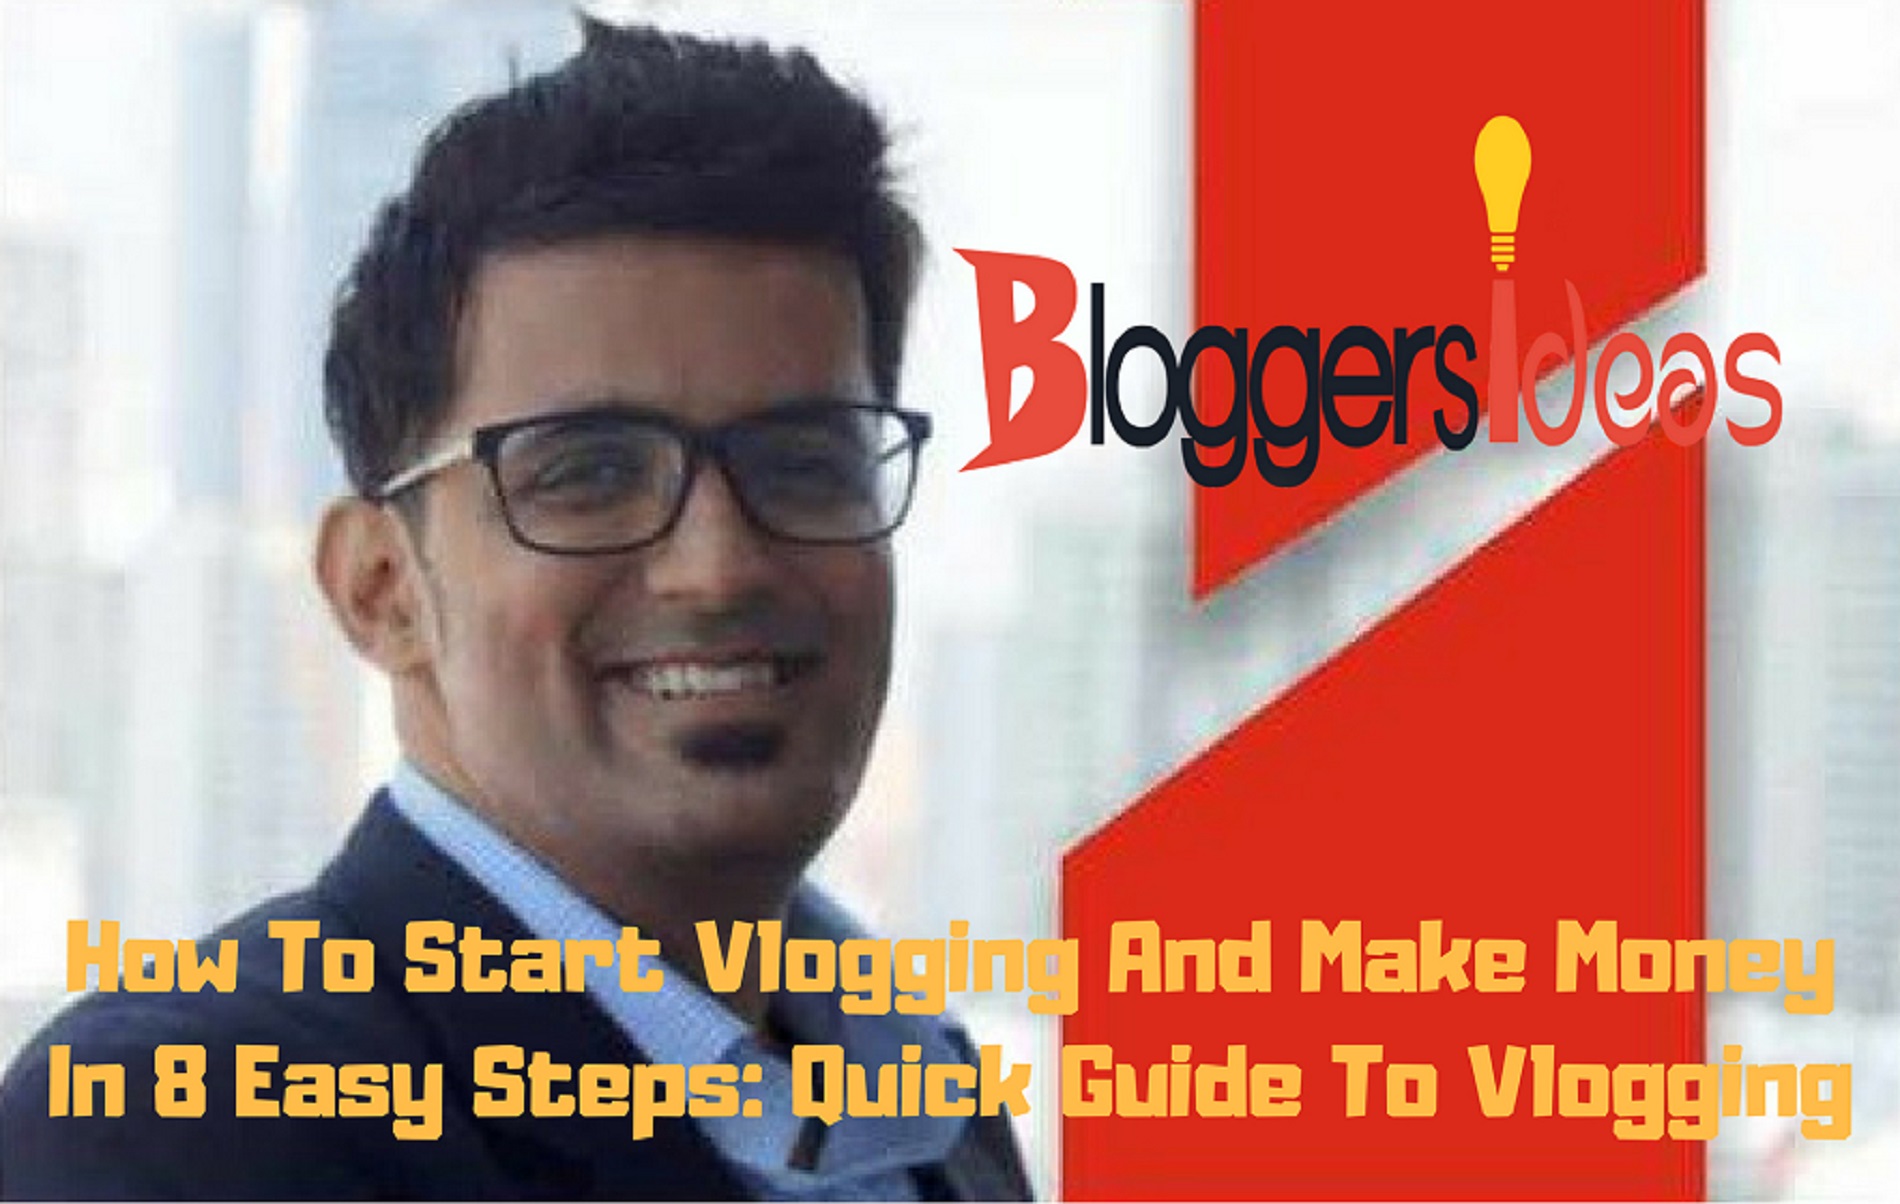 BloggersIdeas guide- How to start vlogging